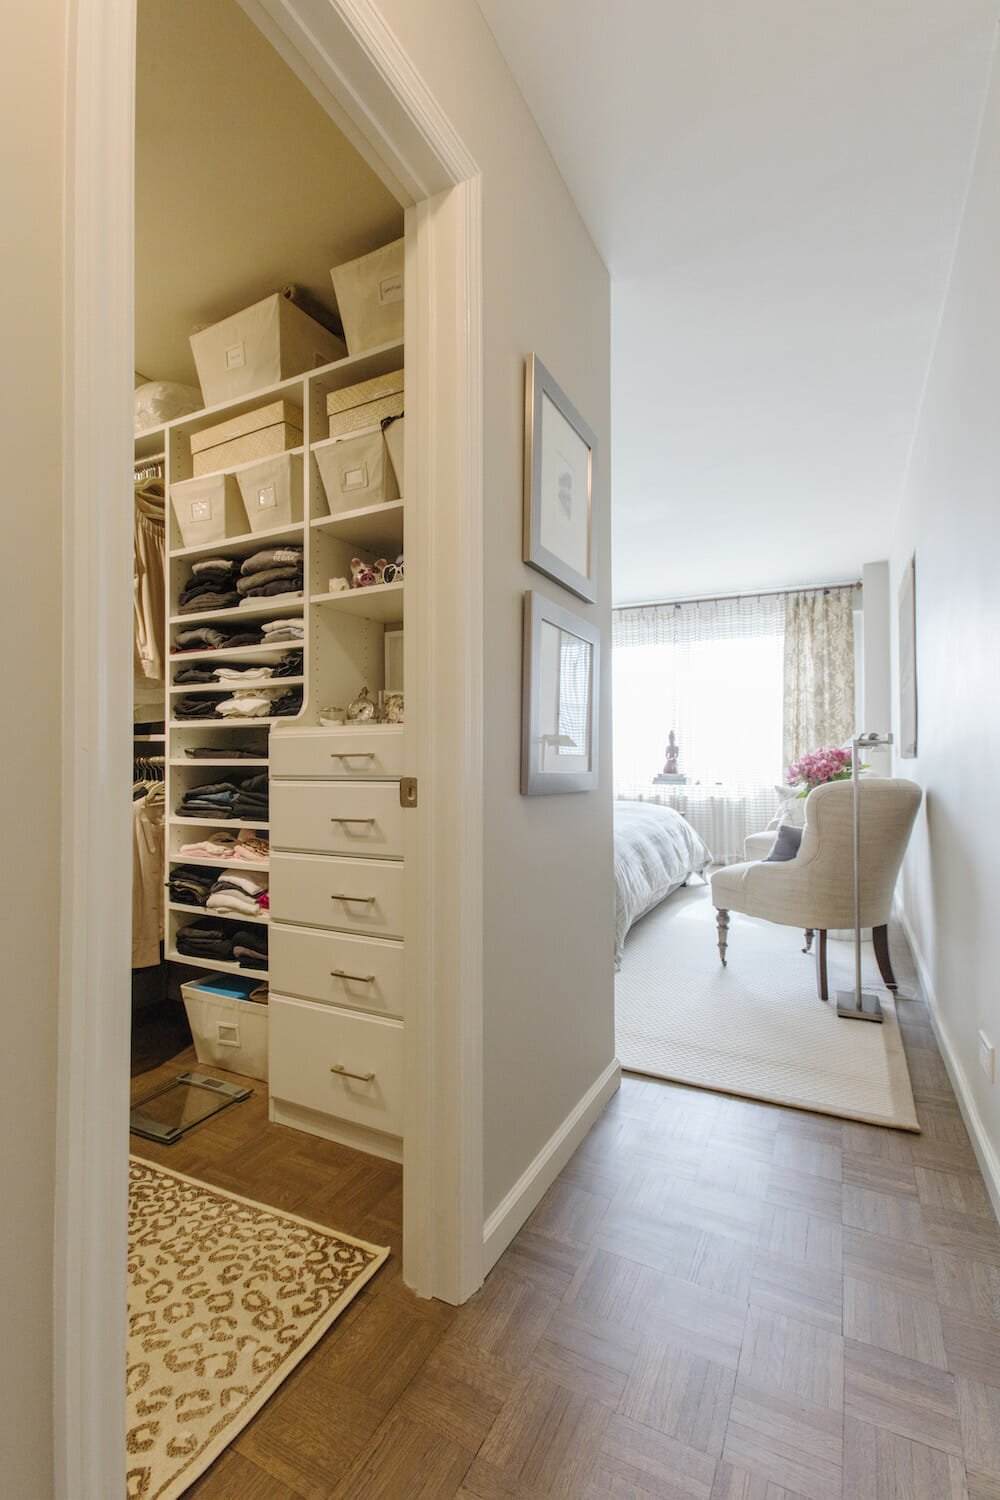 Bedroom: Closet & Storage